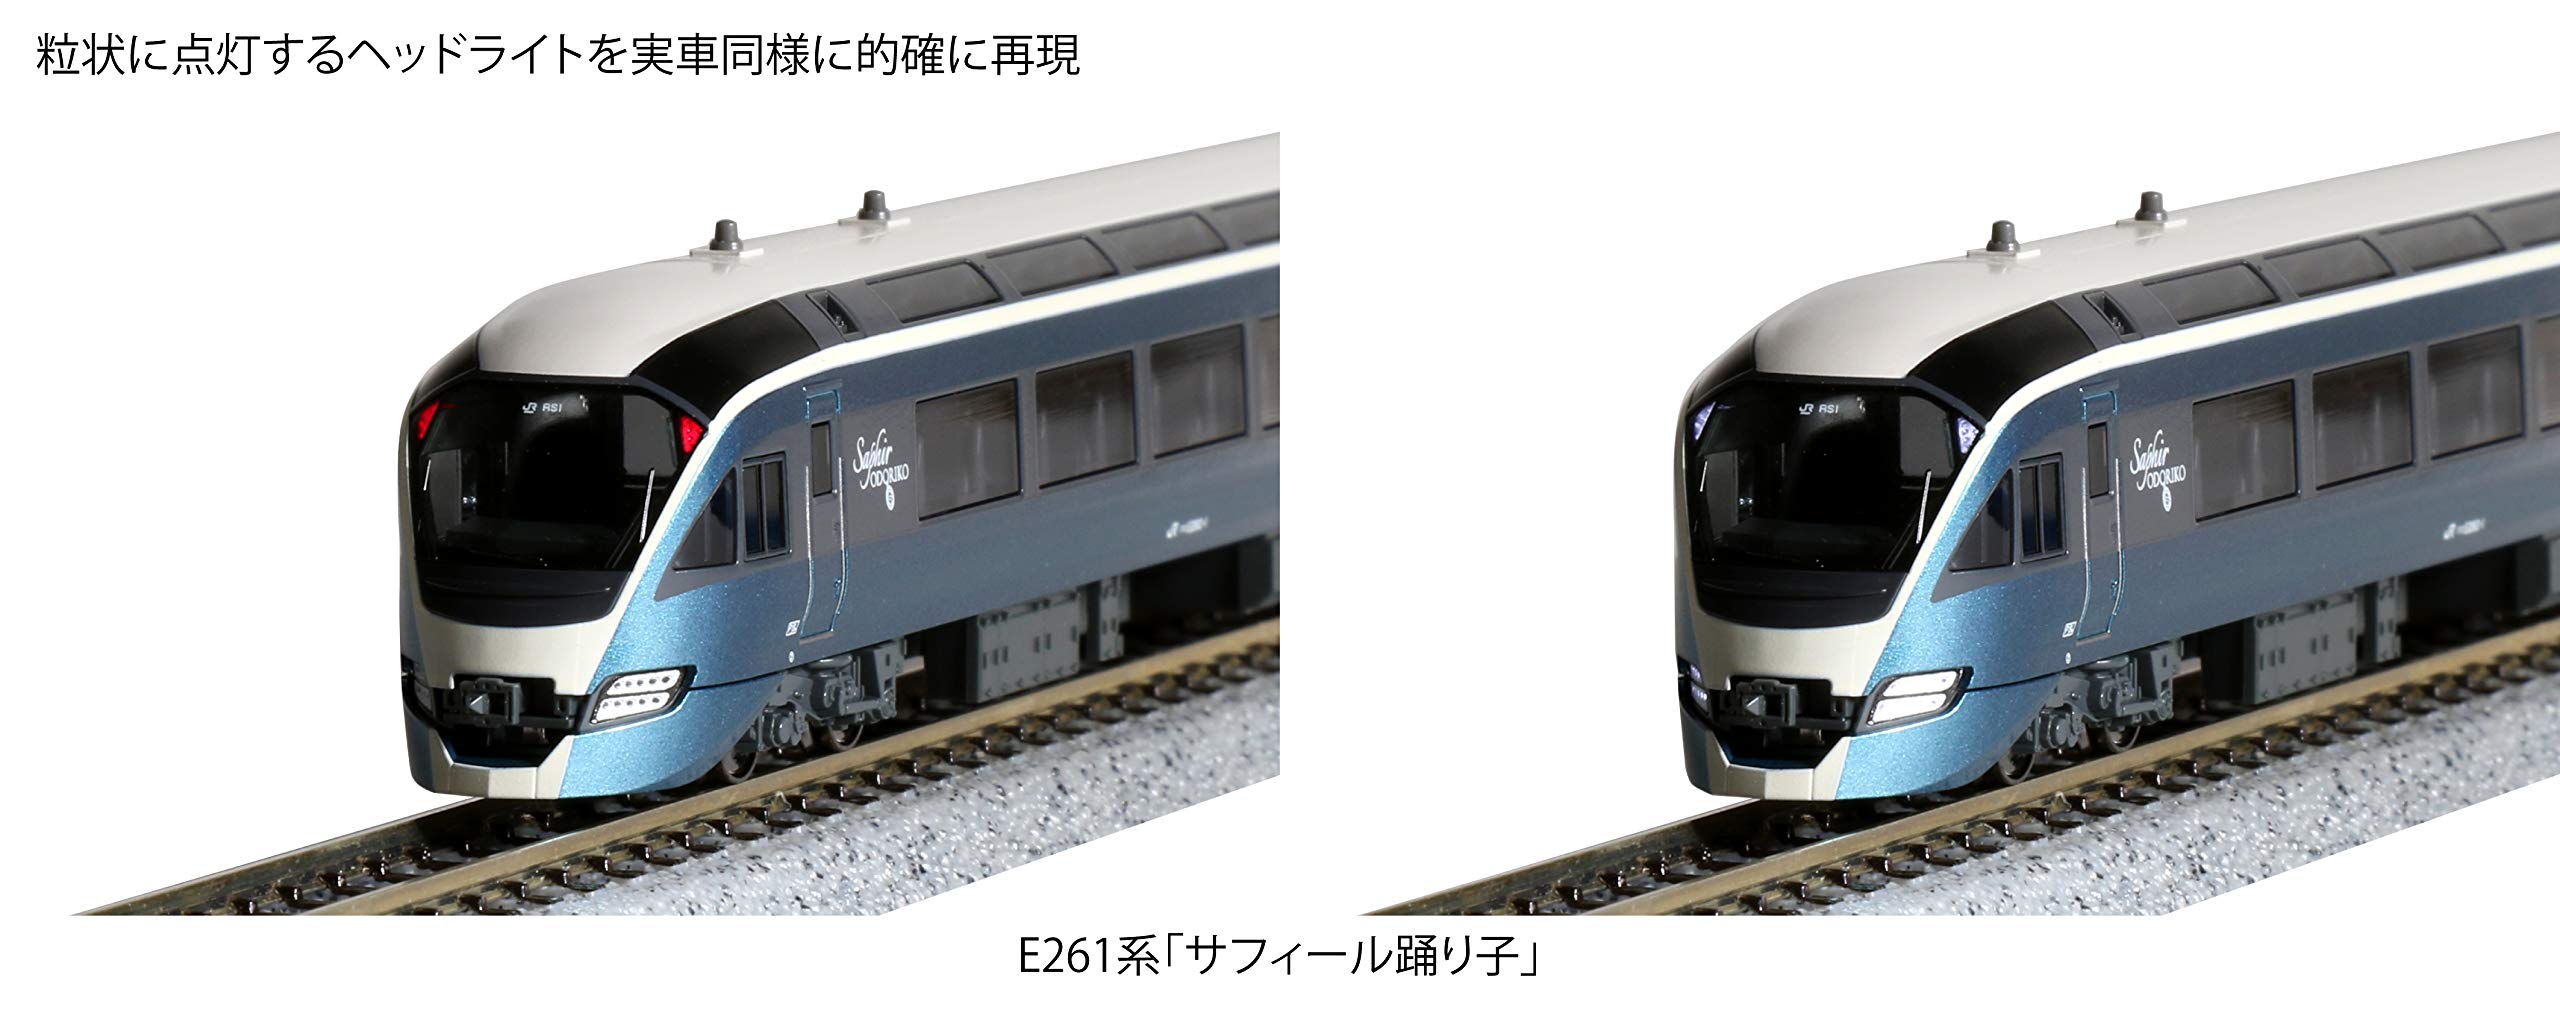 Kato N Gauge E261 Series 8-Car Set Saphir Odoriko Special 10-1644 Model Railway Train